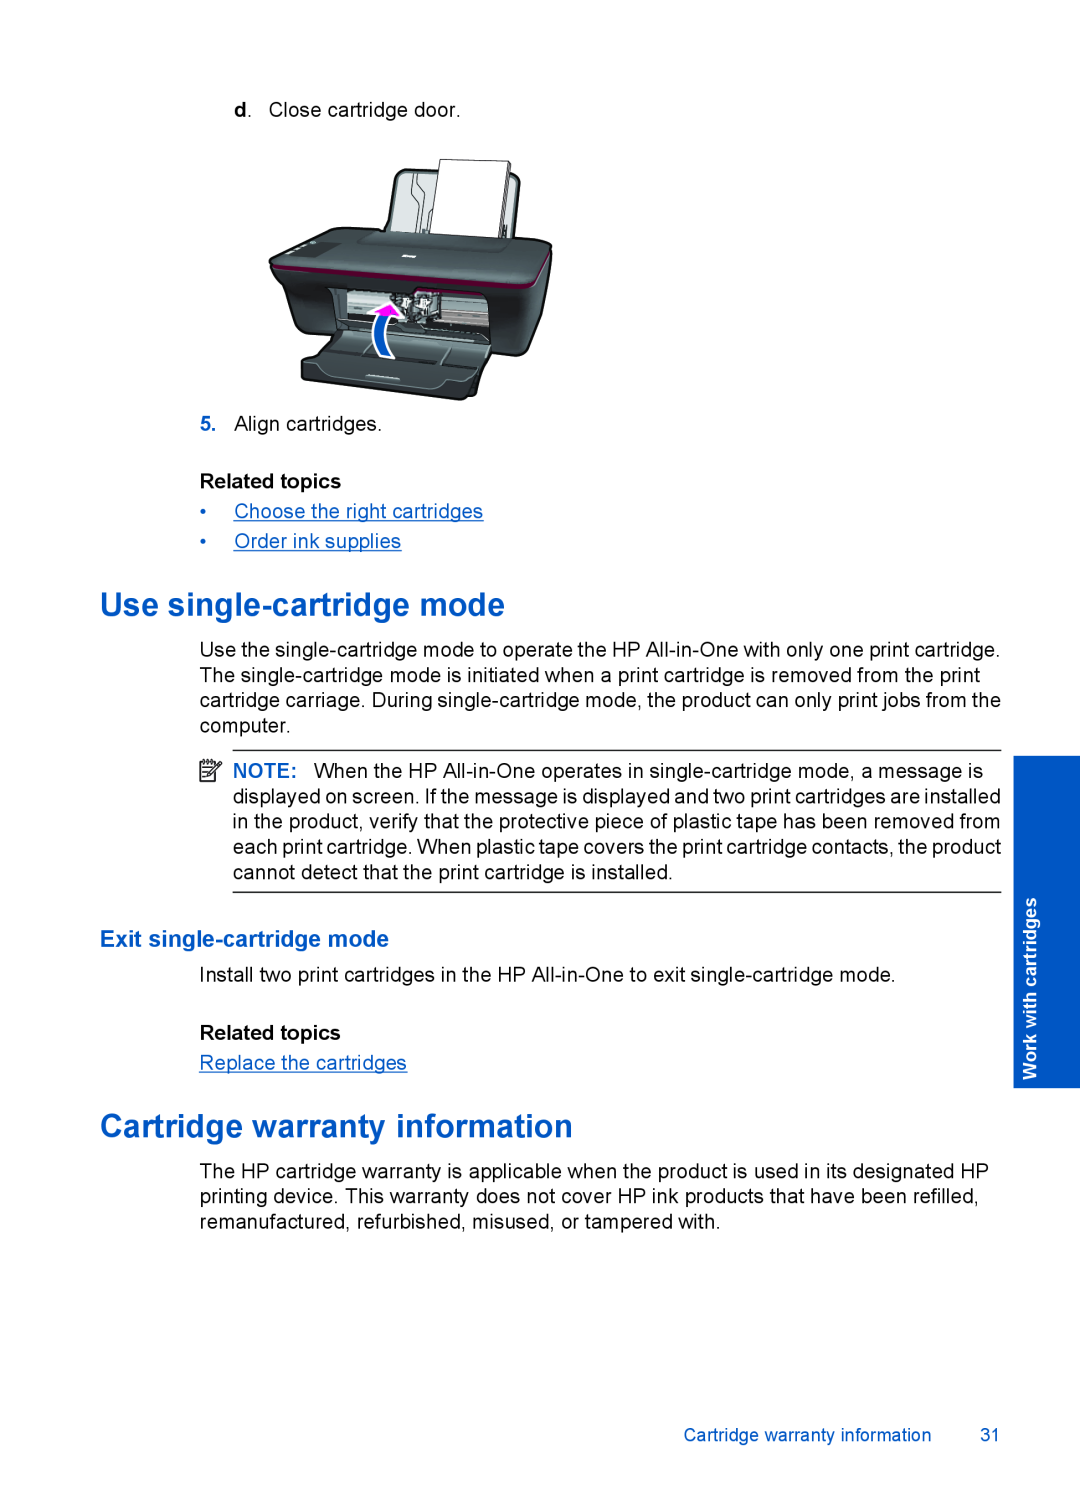 HP 1050 - J410a Use single-cartridge mode, Cartridge warranty information, Exit single-cartridge mode, Related topics 